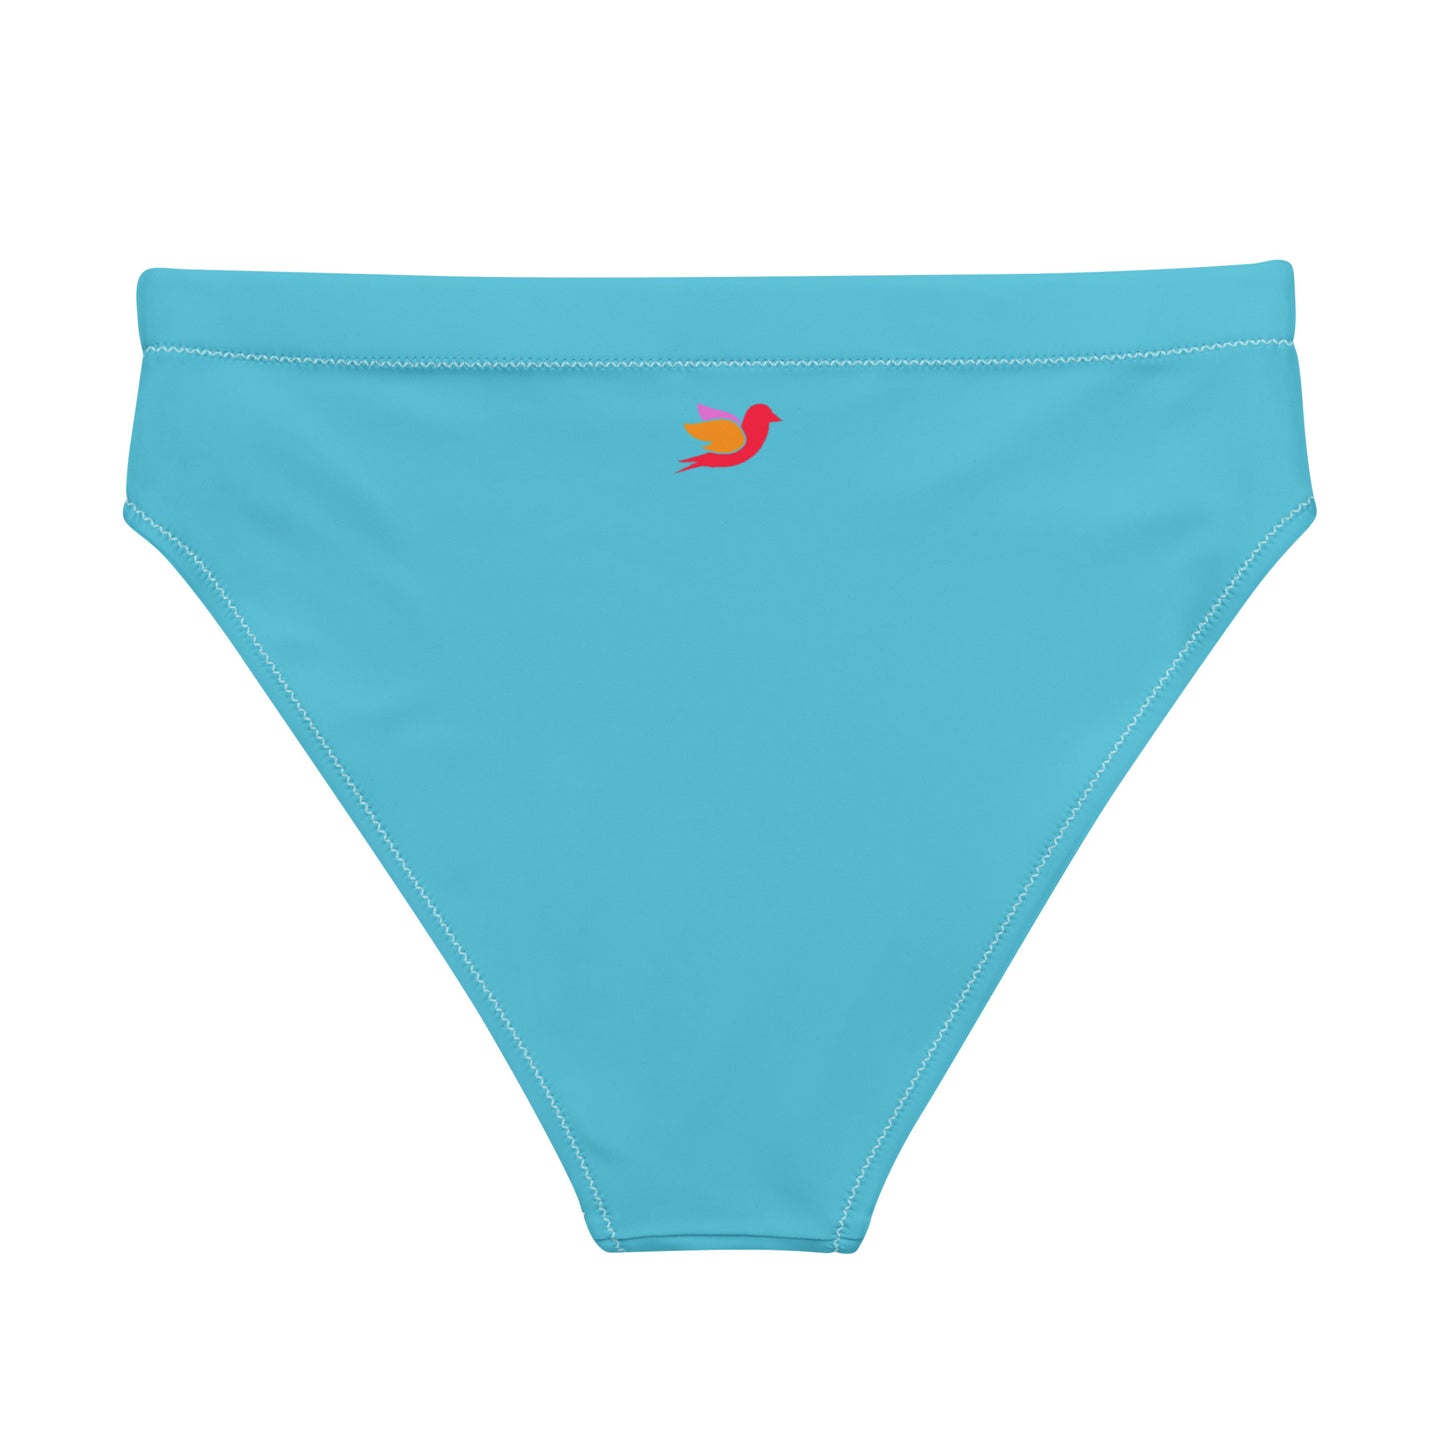 Fiori Solid Color Recycled Mid-Rise Cheeky Bikini Bottom